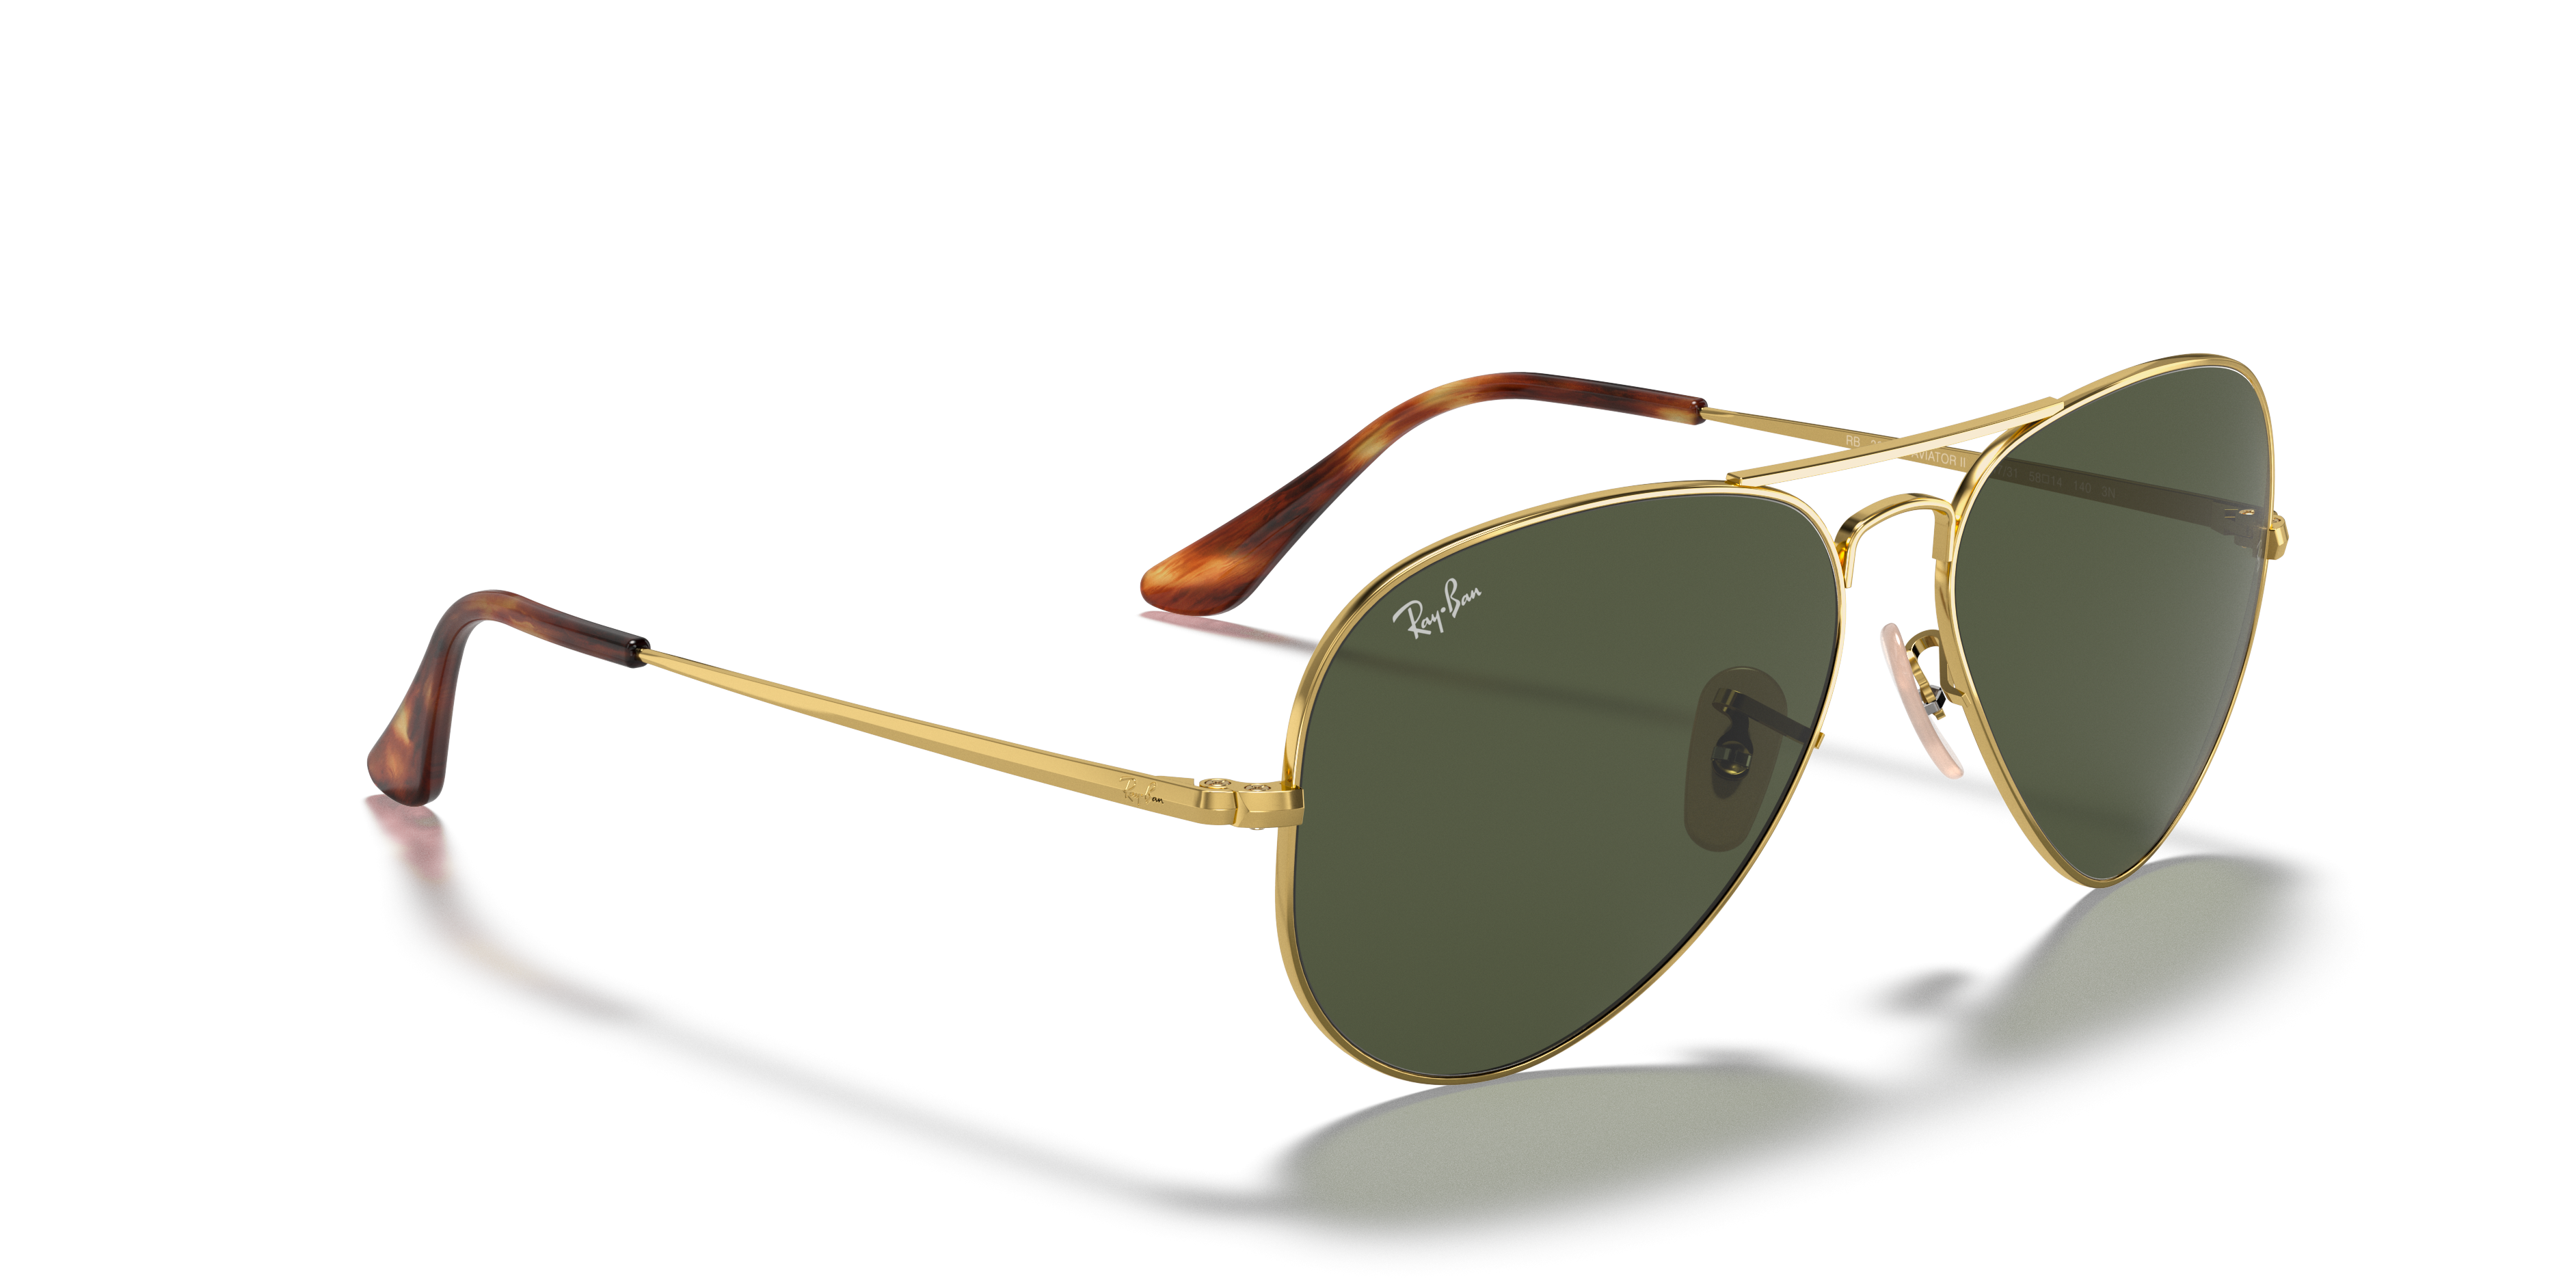 Aviator Metal Ii Sunglasses in Gold and Green | Ray-Ban®